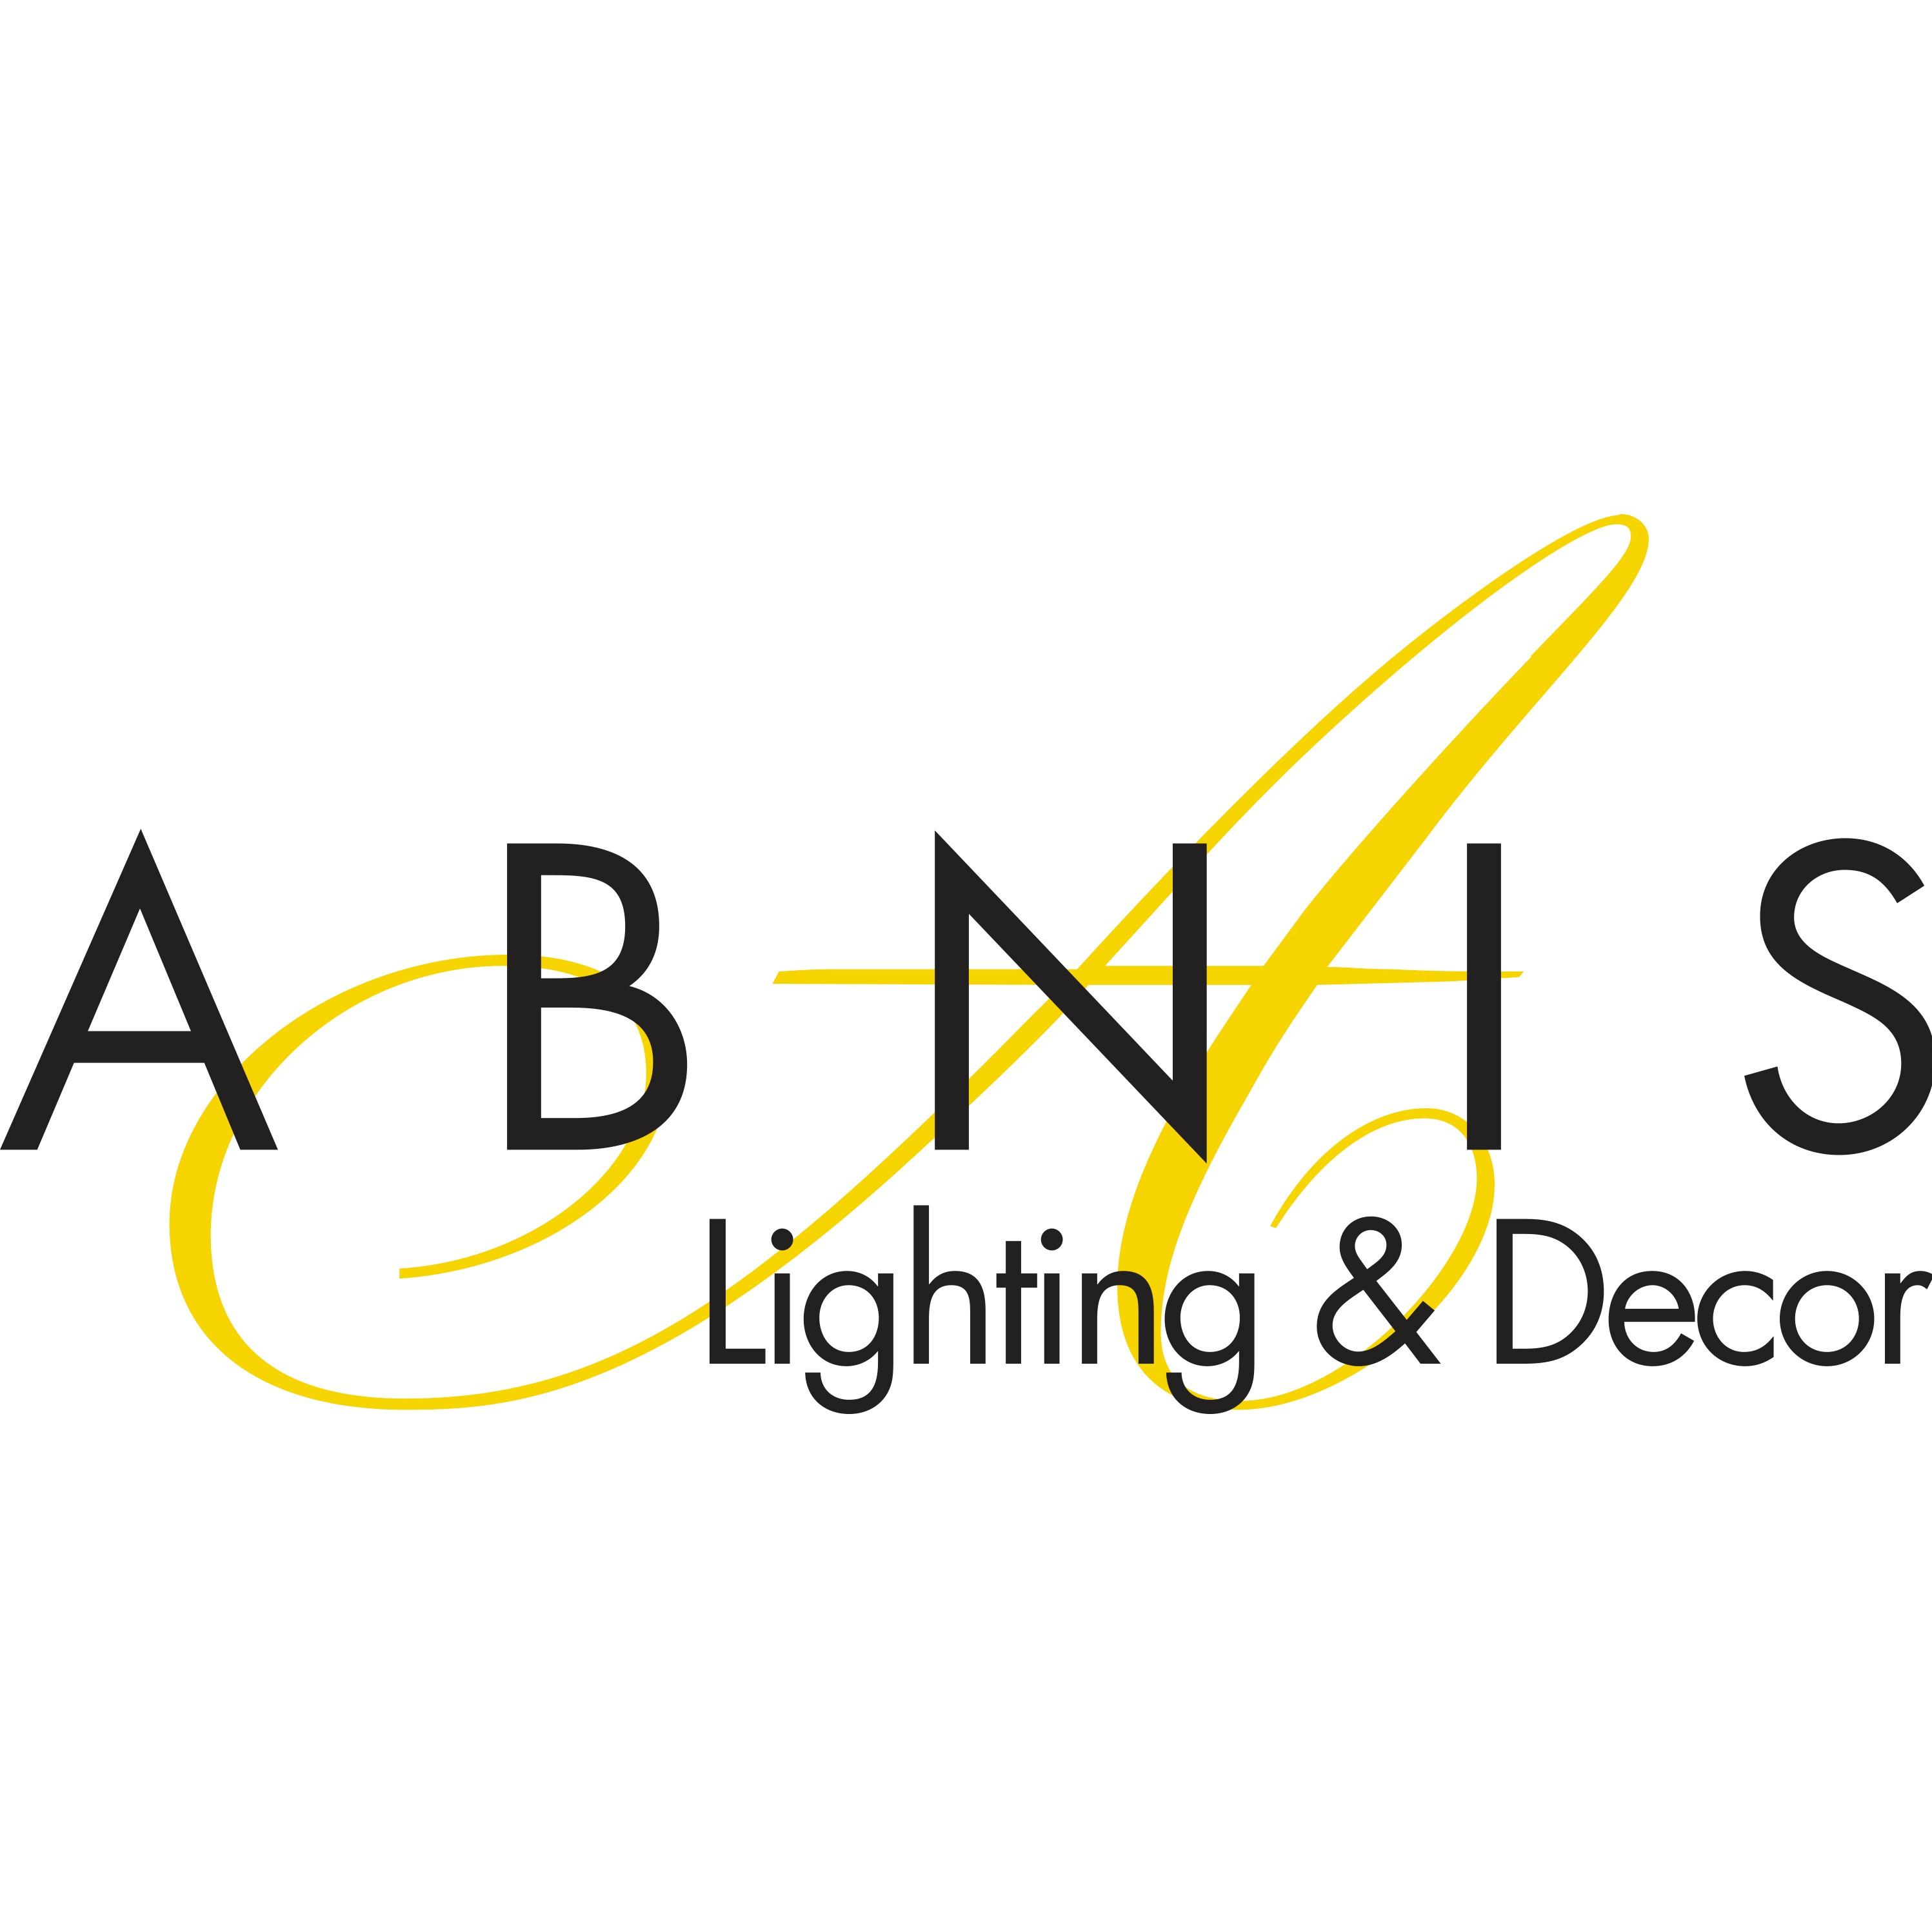 Abnis Lighting & Decor Logo